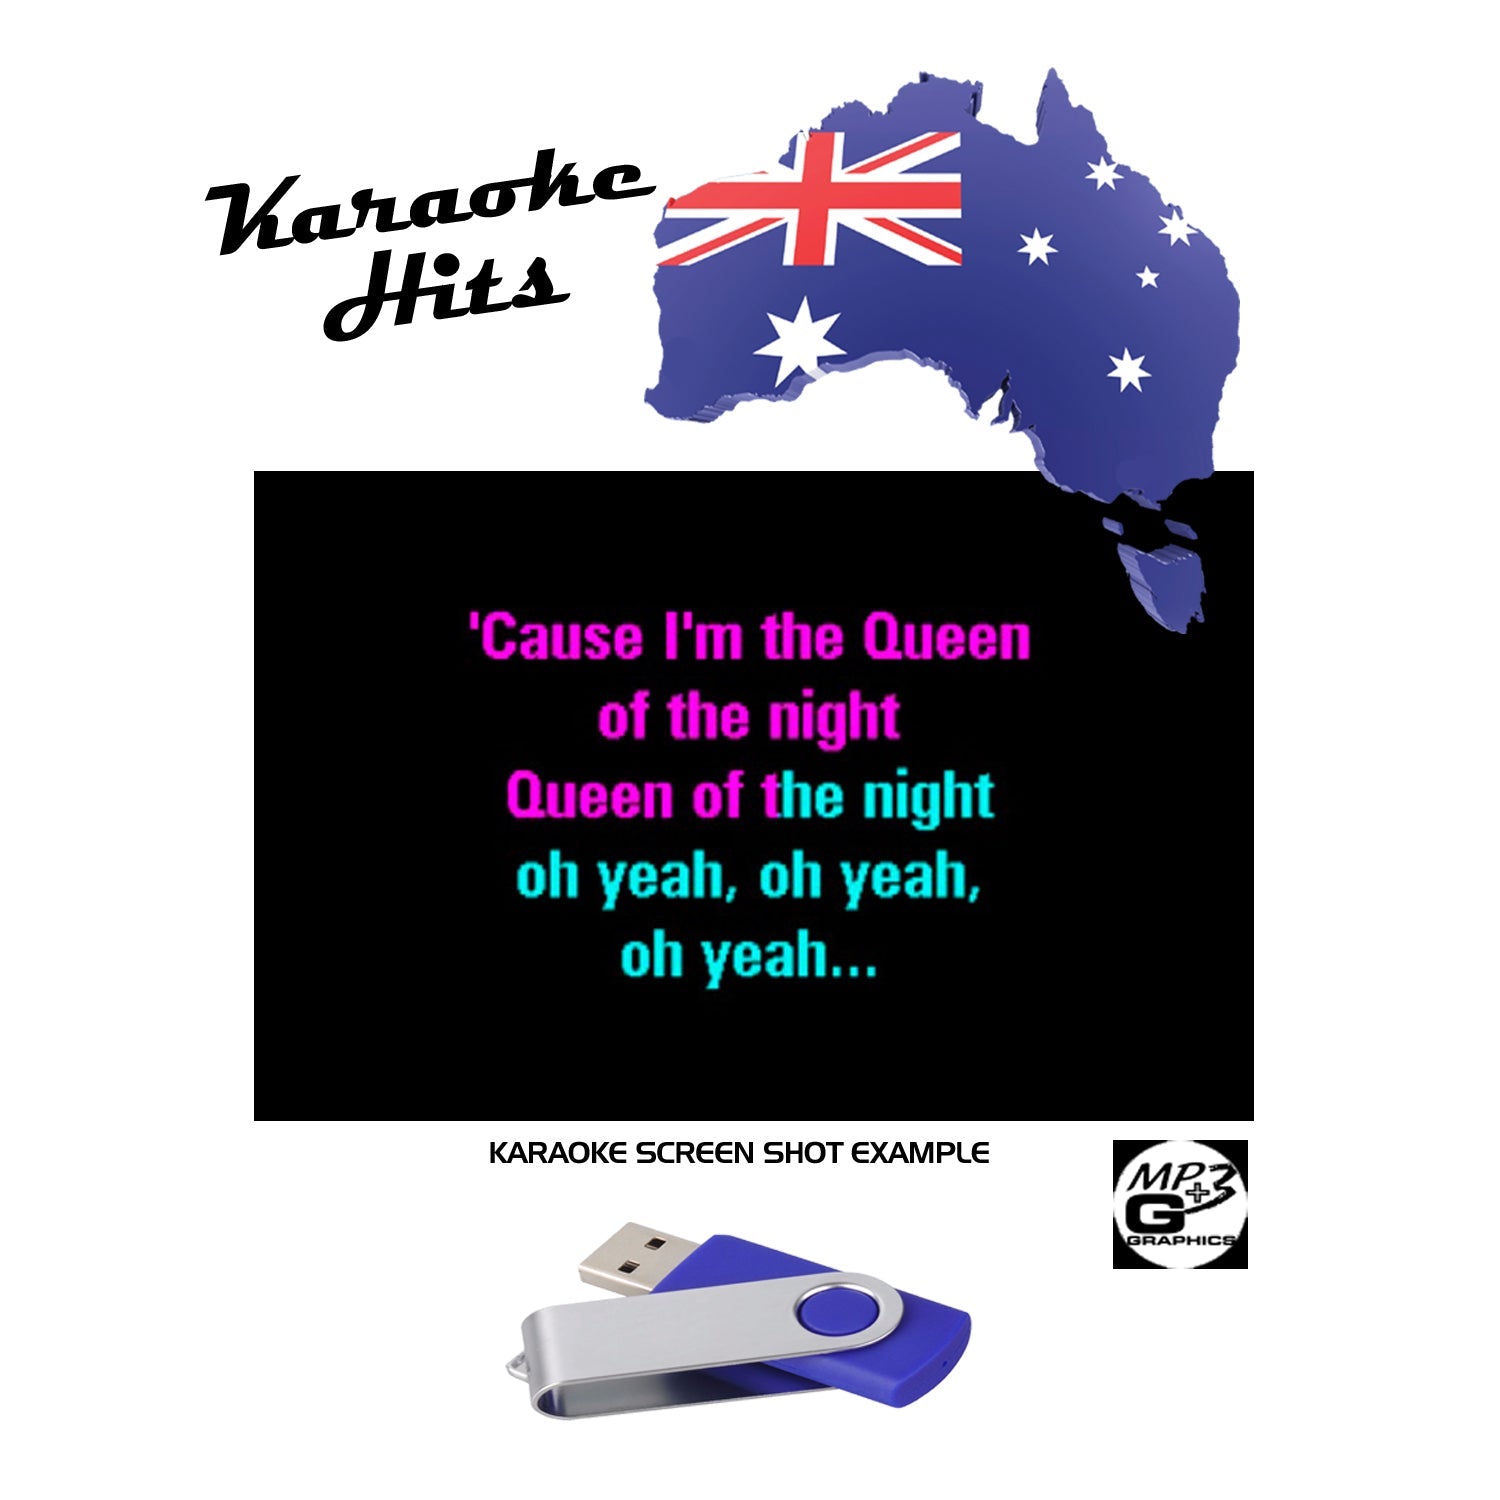 All Aussie Hits Vol's 1 to 49 SET on MP3+G (USB) - Capital Karaoke - Karaoke Home Entertainment